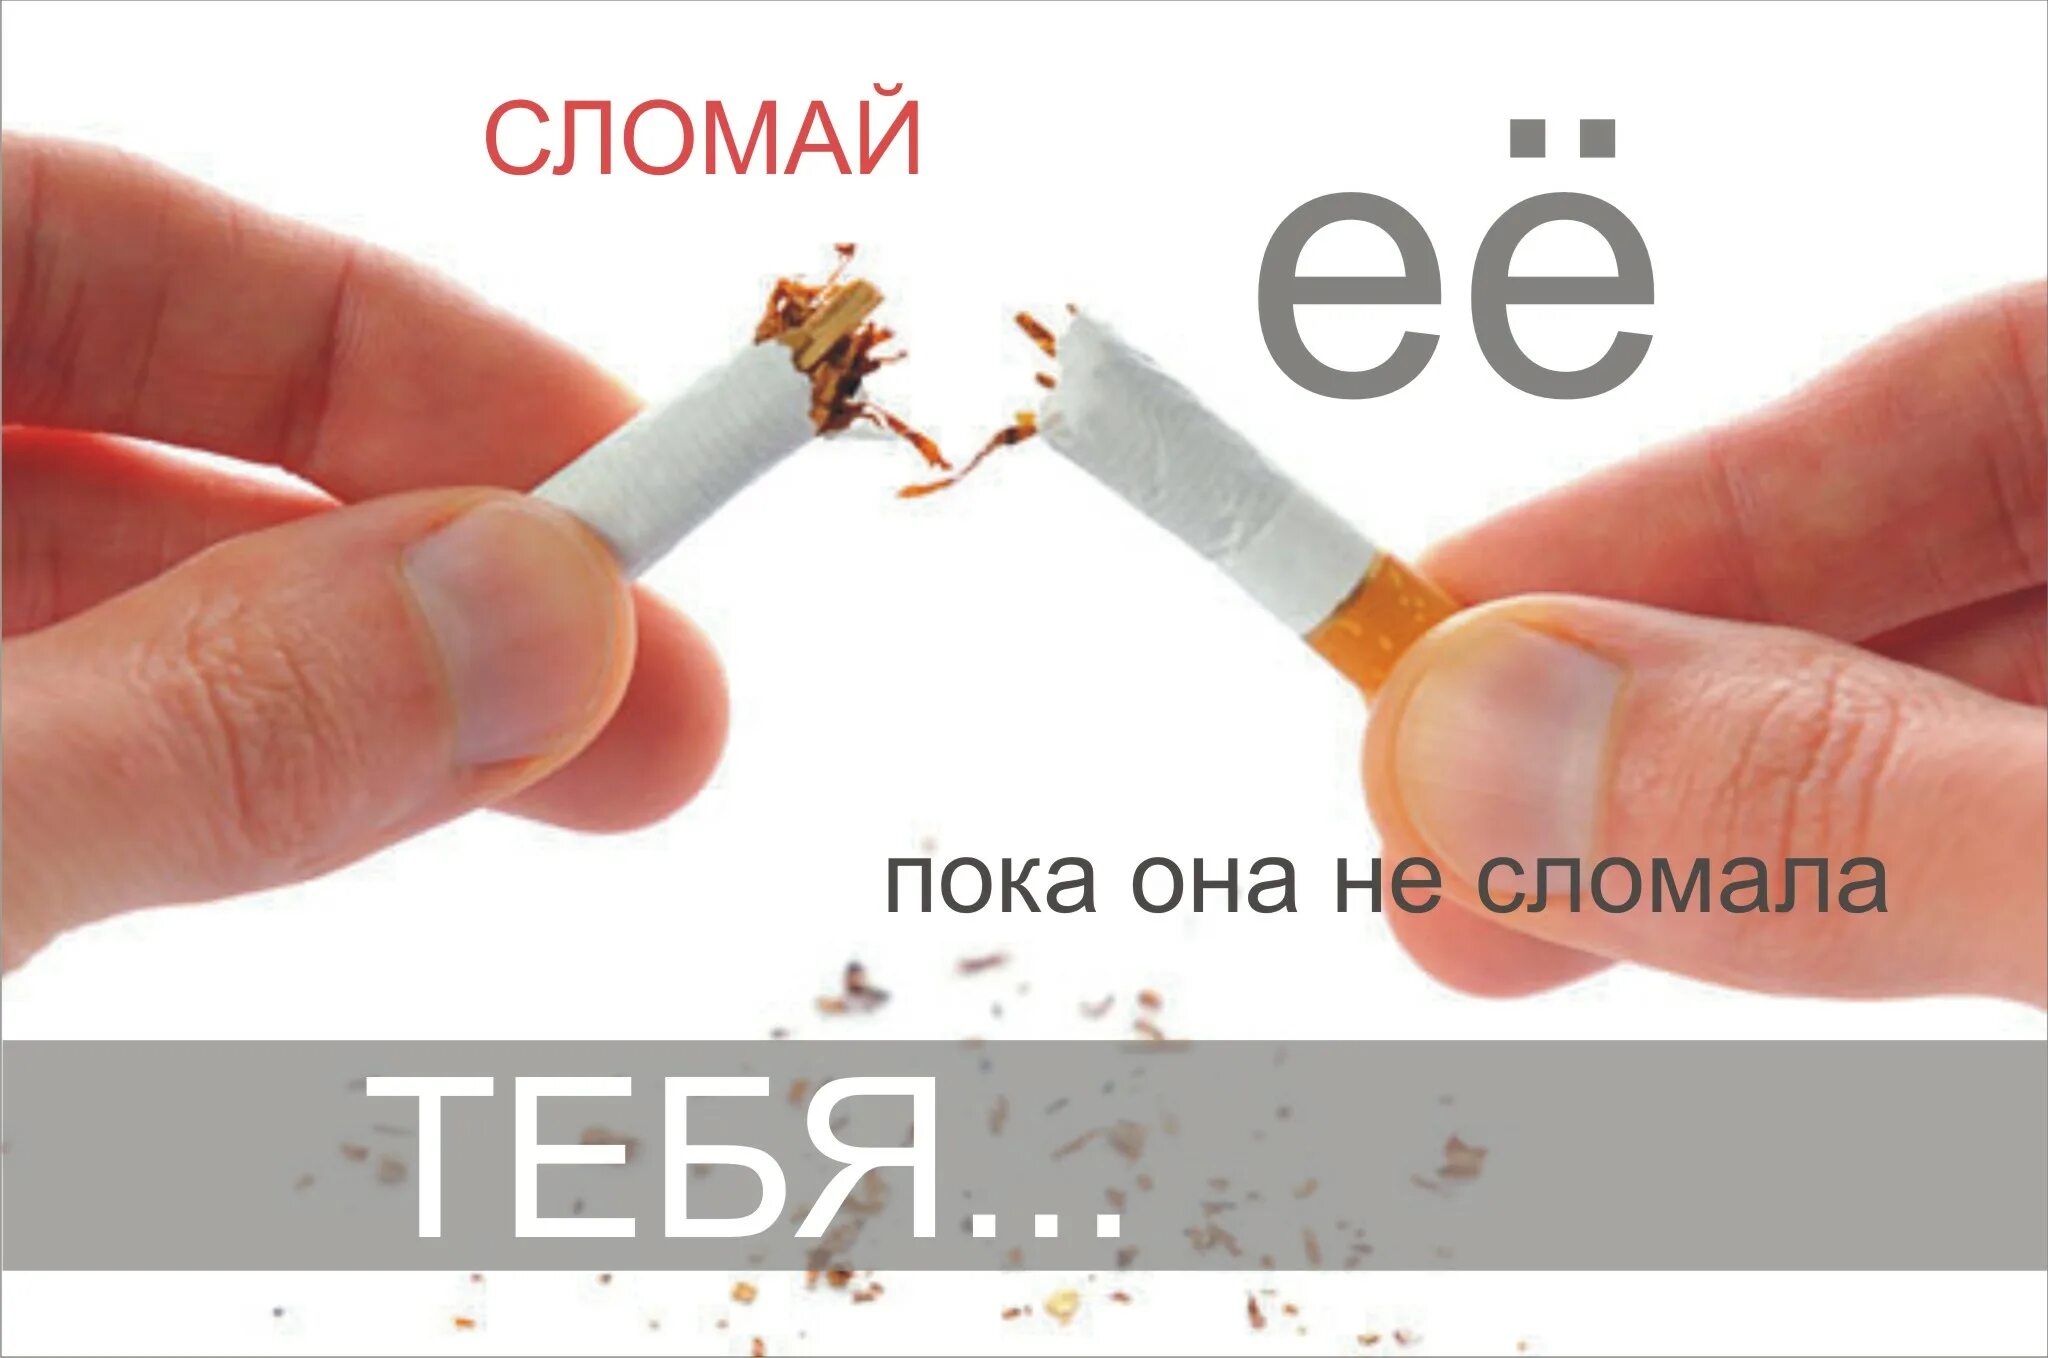 Разбитая пока. Против курения. Вред табака плакат. Плакат против курения. Плакат бросай курить.